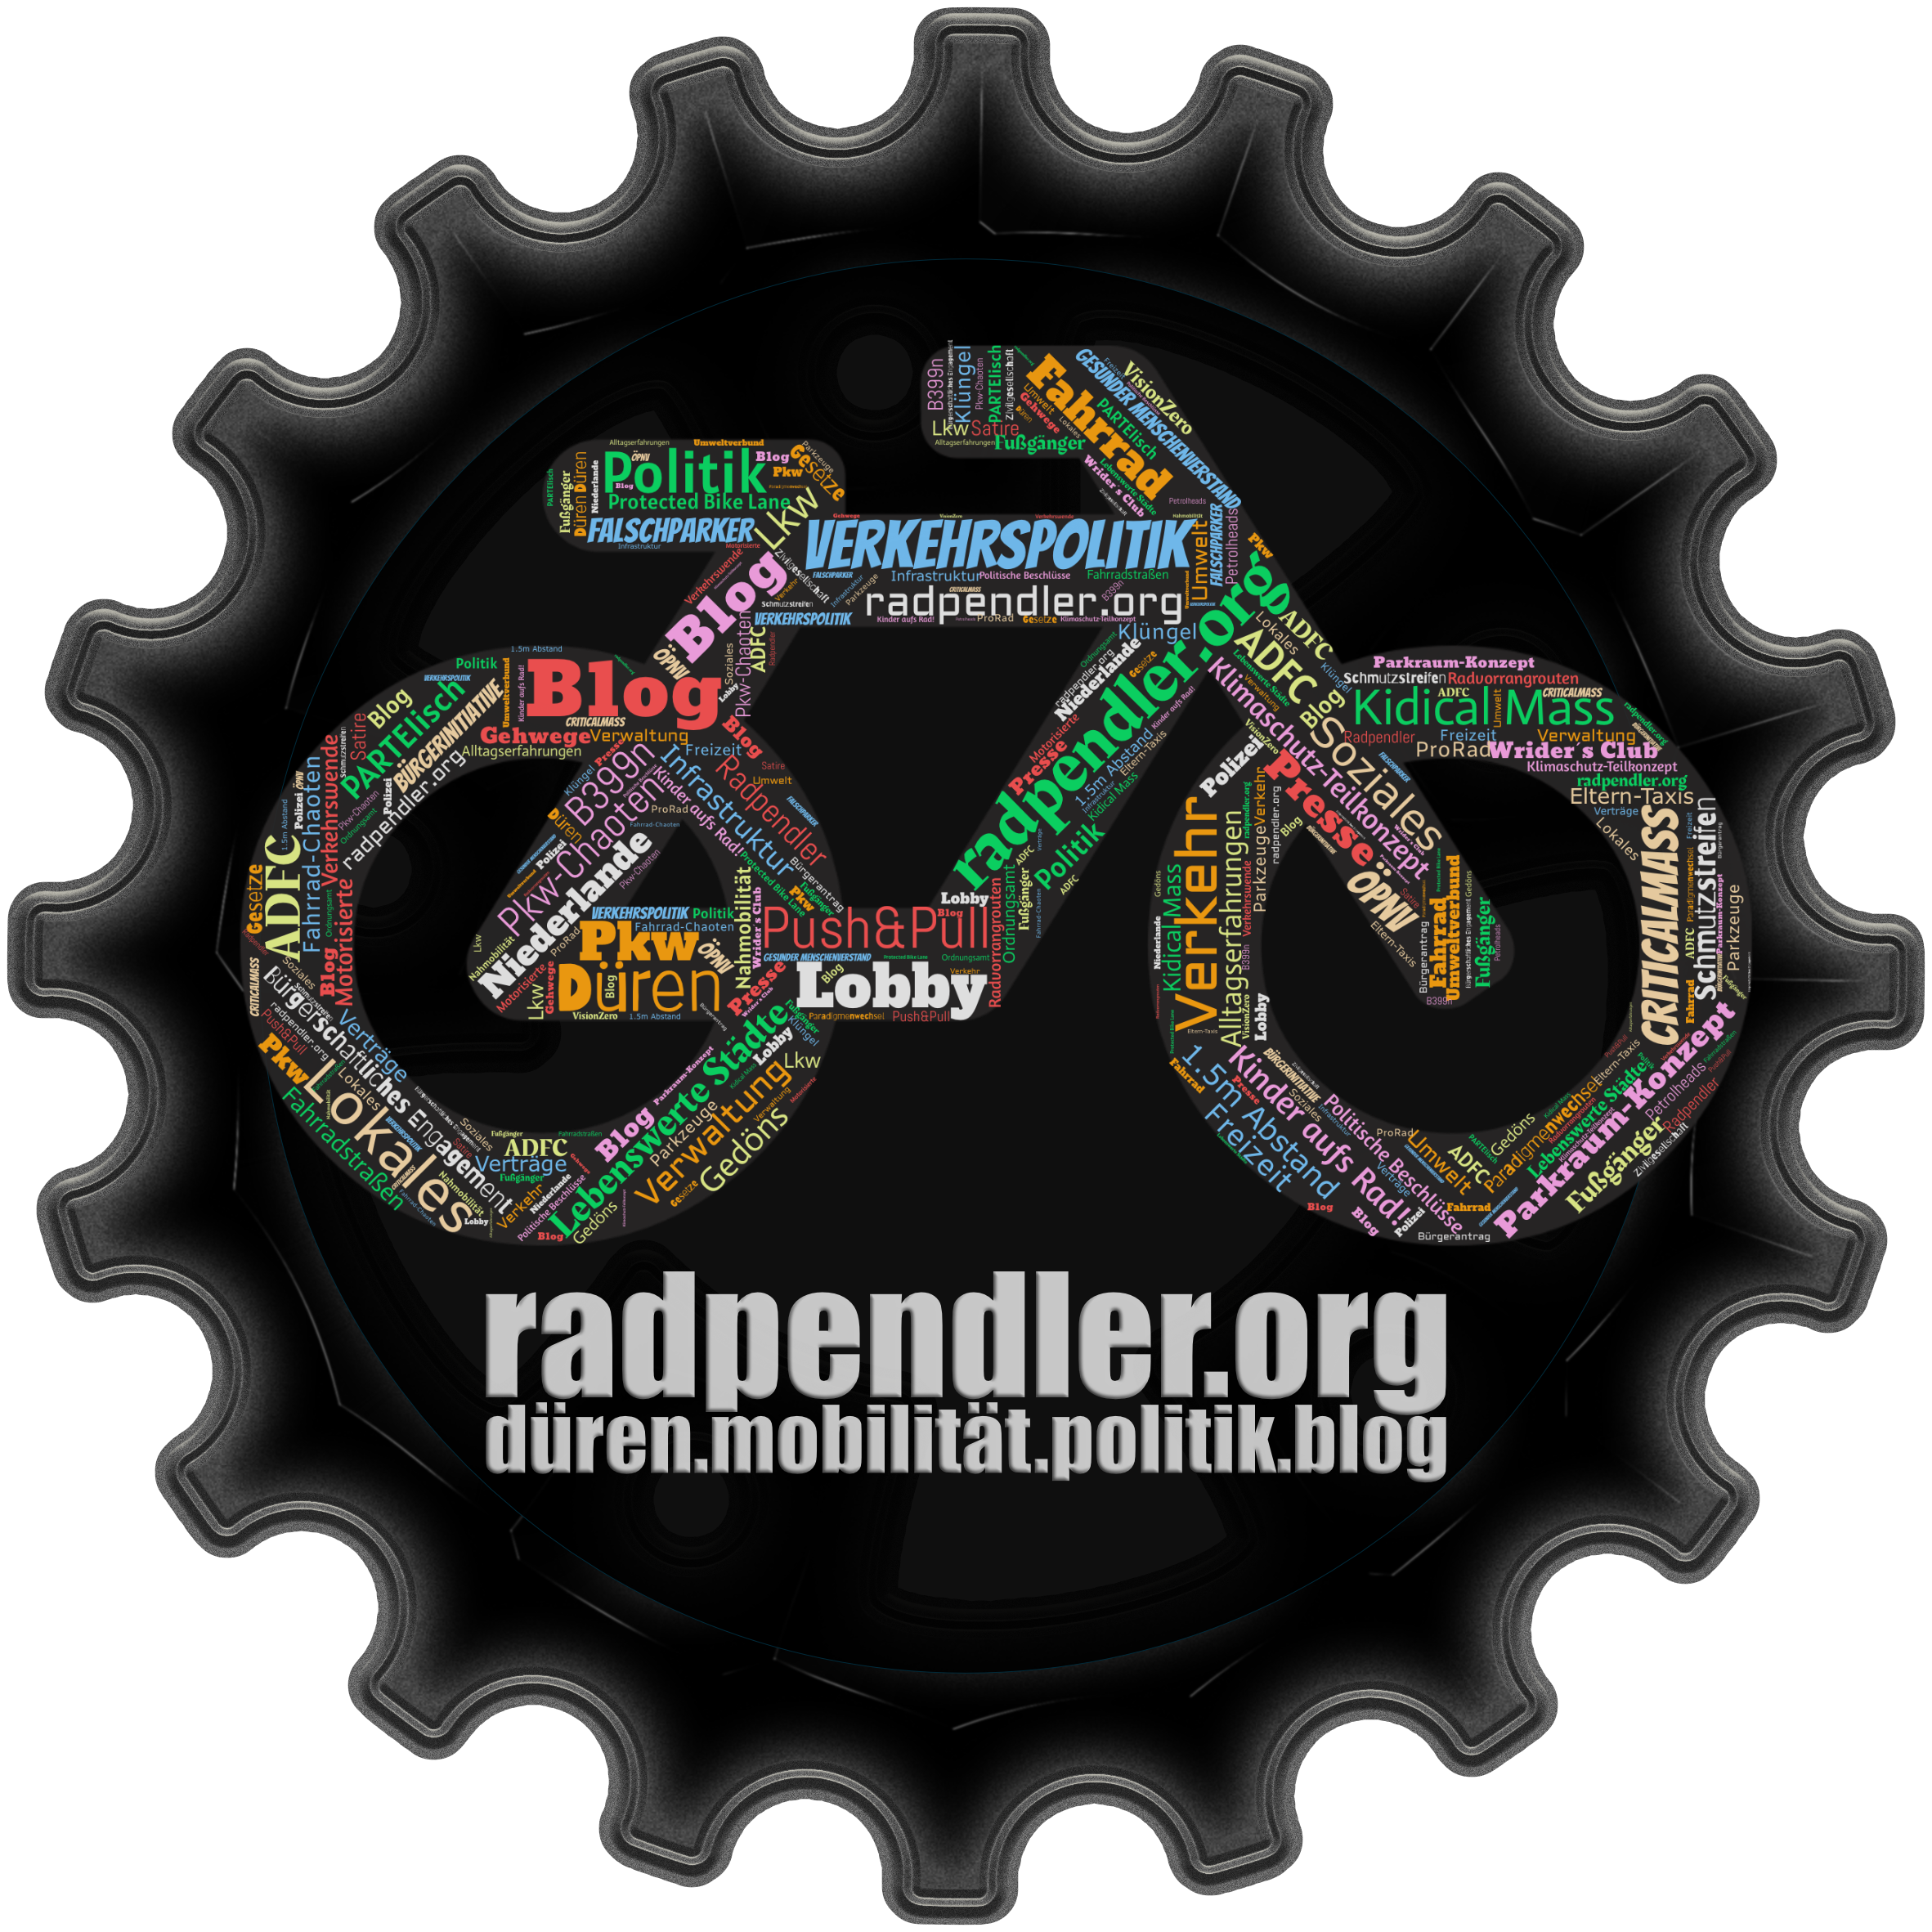 radpendler.org